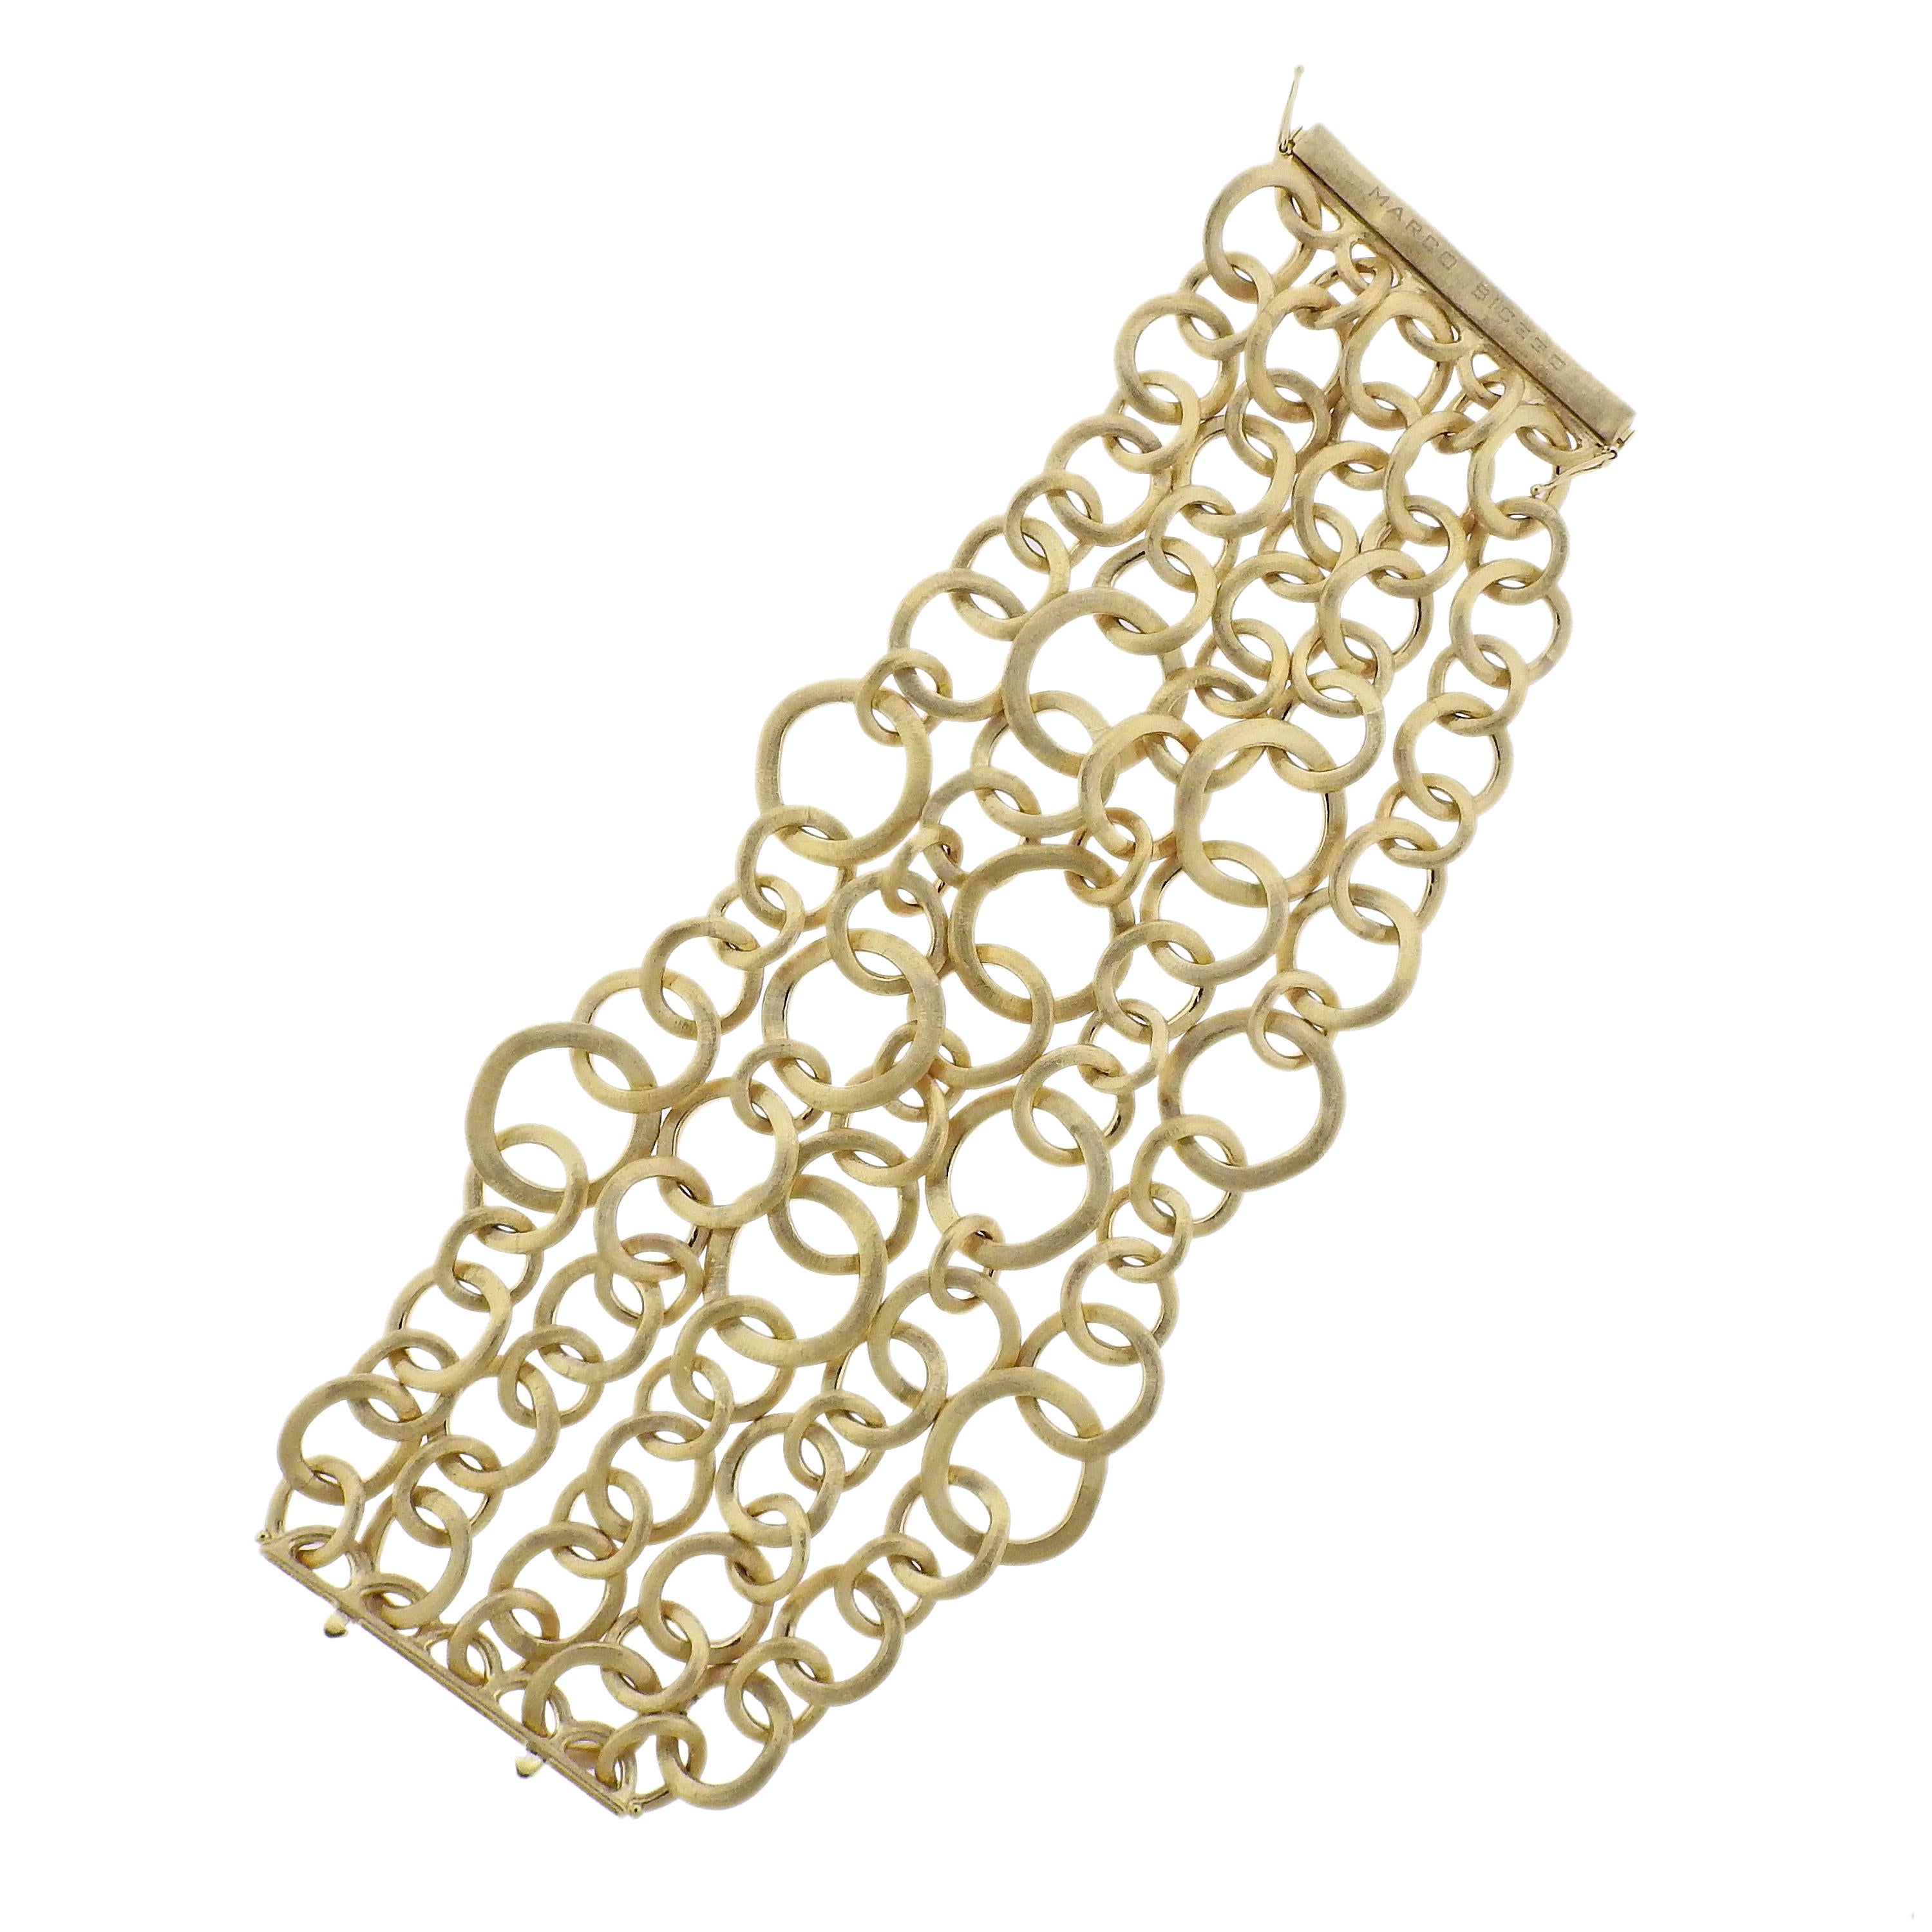 Marco Bicego Jaipur collection 18K yellow gold multi strand circle link bracelet. Bracelet measures 8